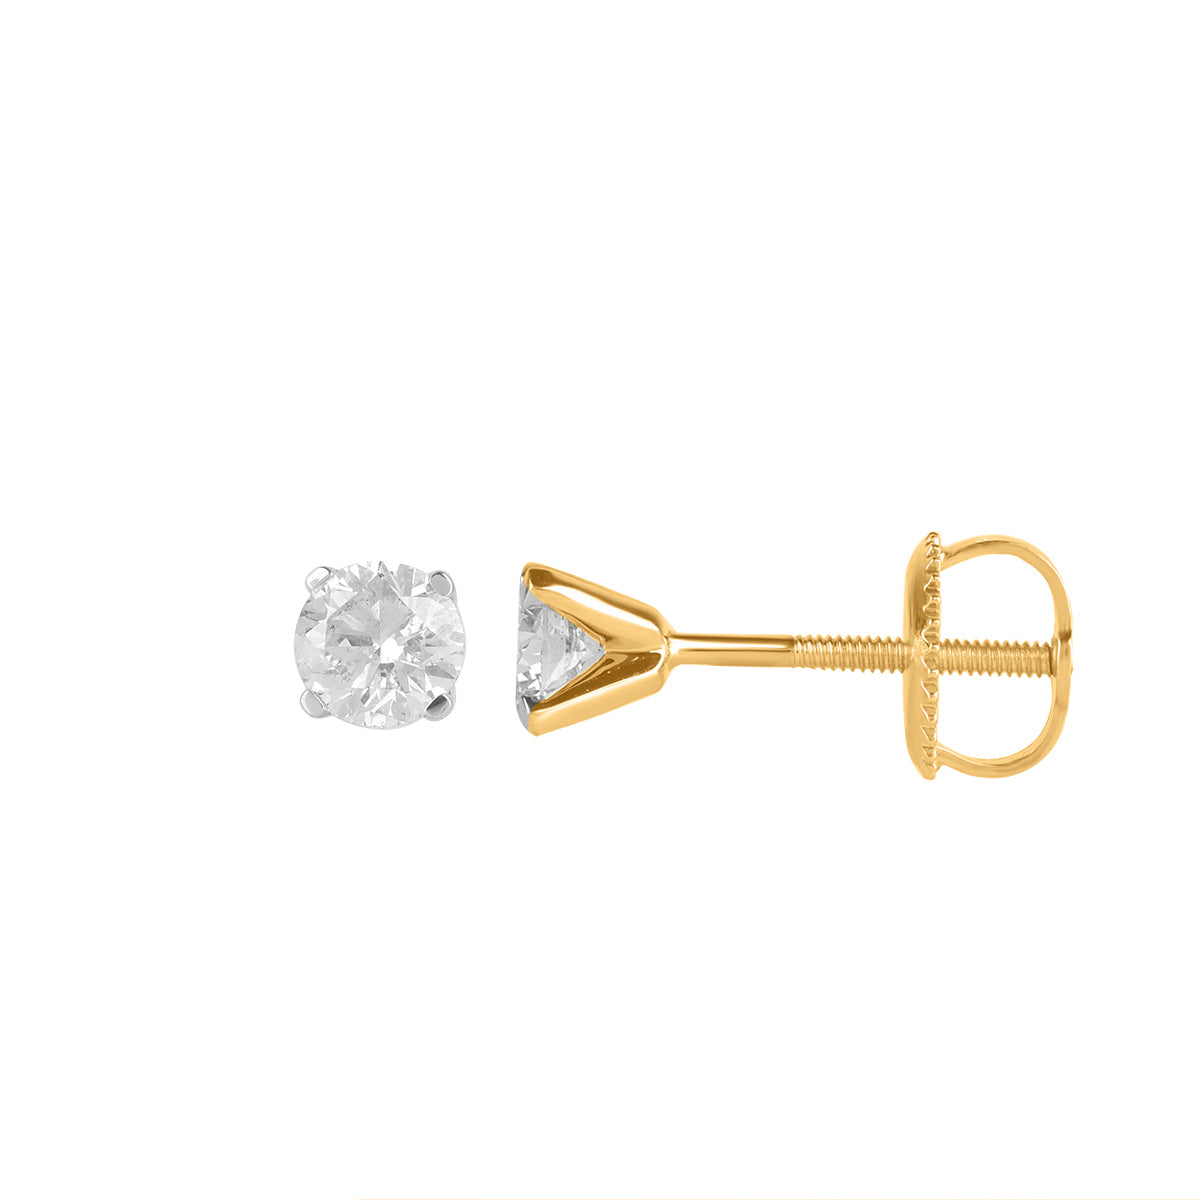 18ct Yellow Gold Diamond Round Brilliant Cut Stud Earrings .40ct TW